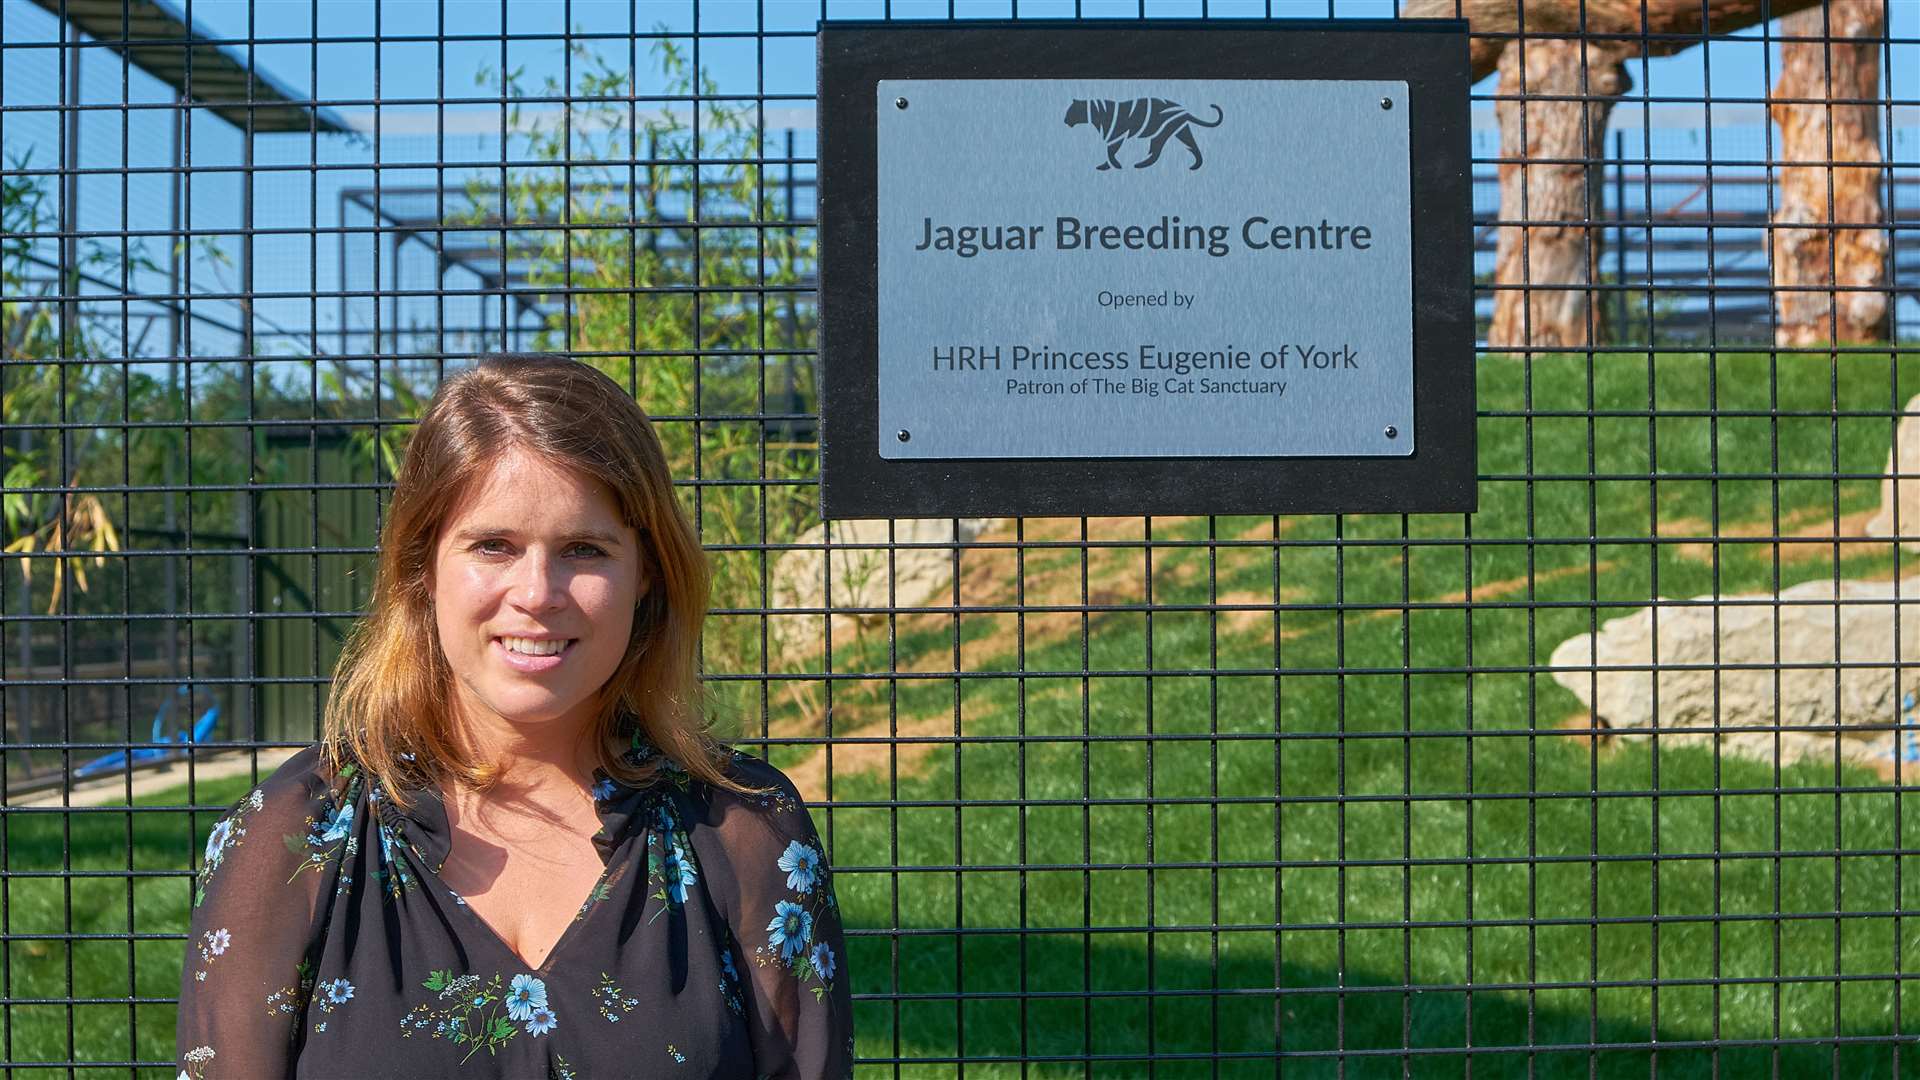 HRH Princess Eugenie opened the big Cat Sanctuary's jaguar breeding centre earlier this month